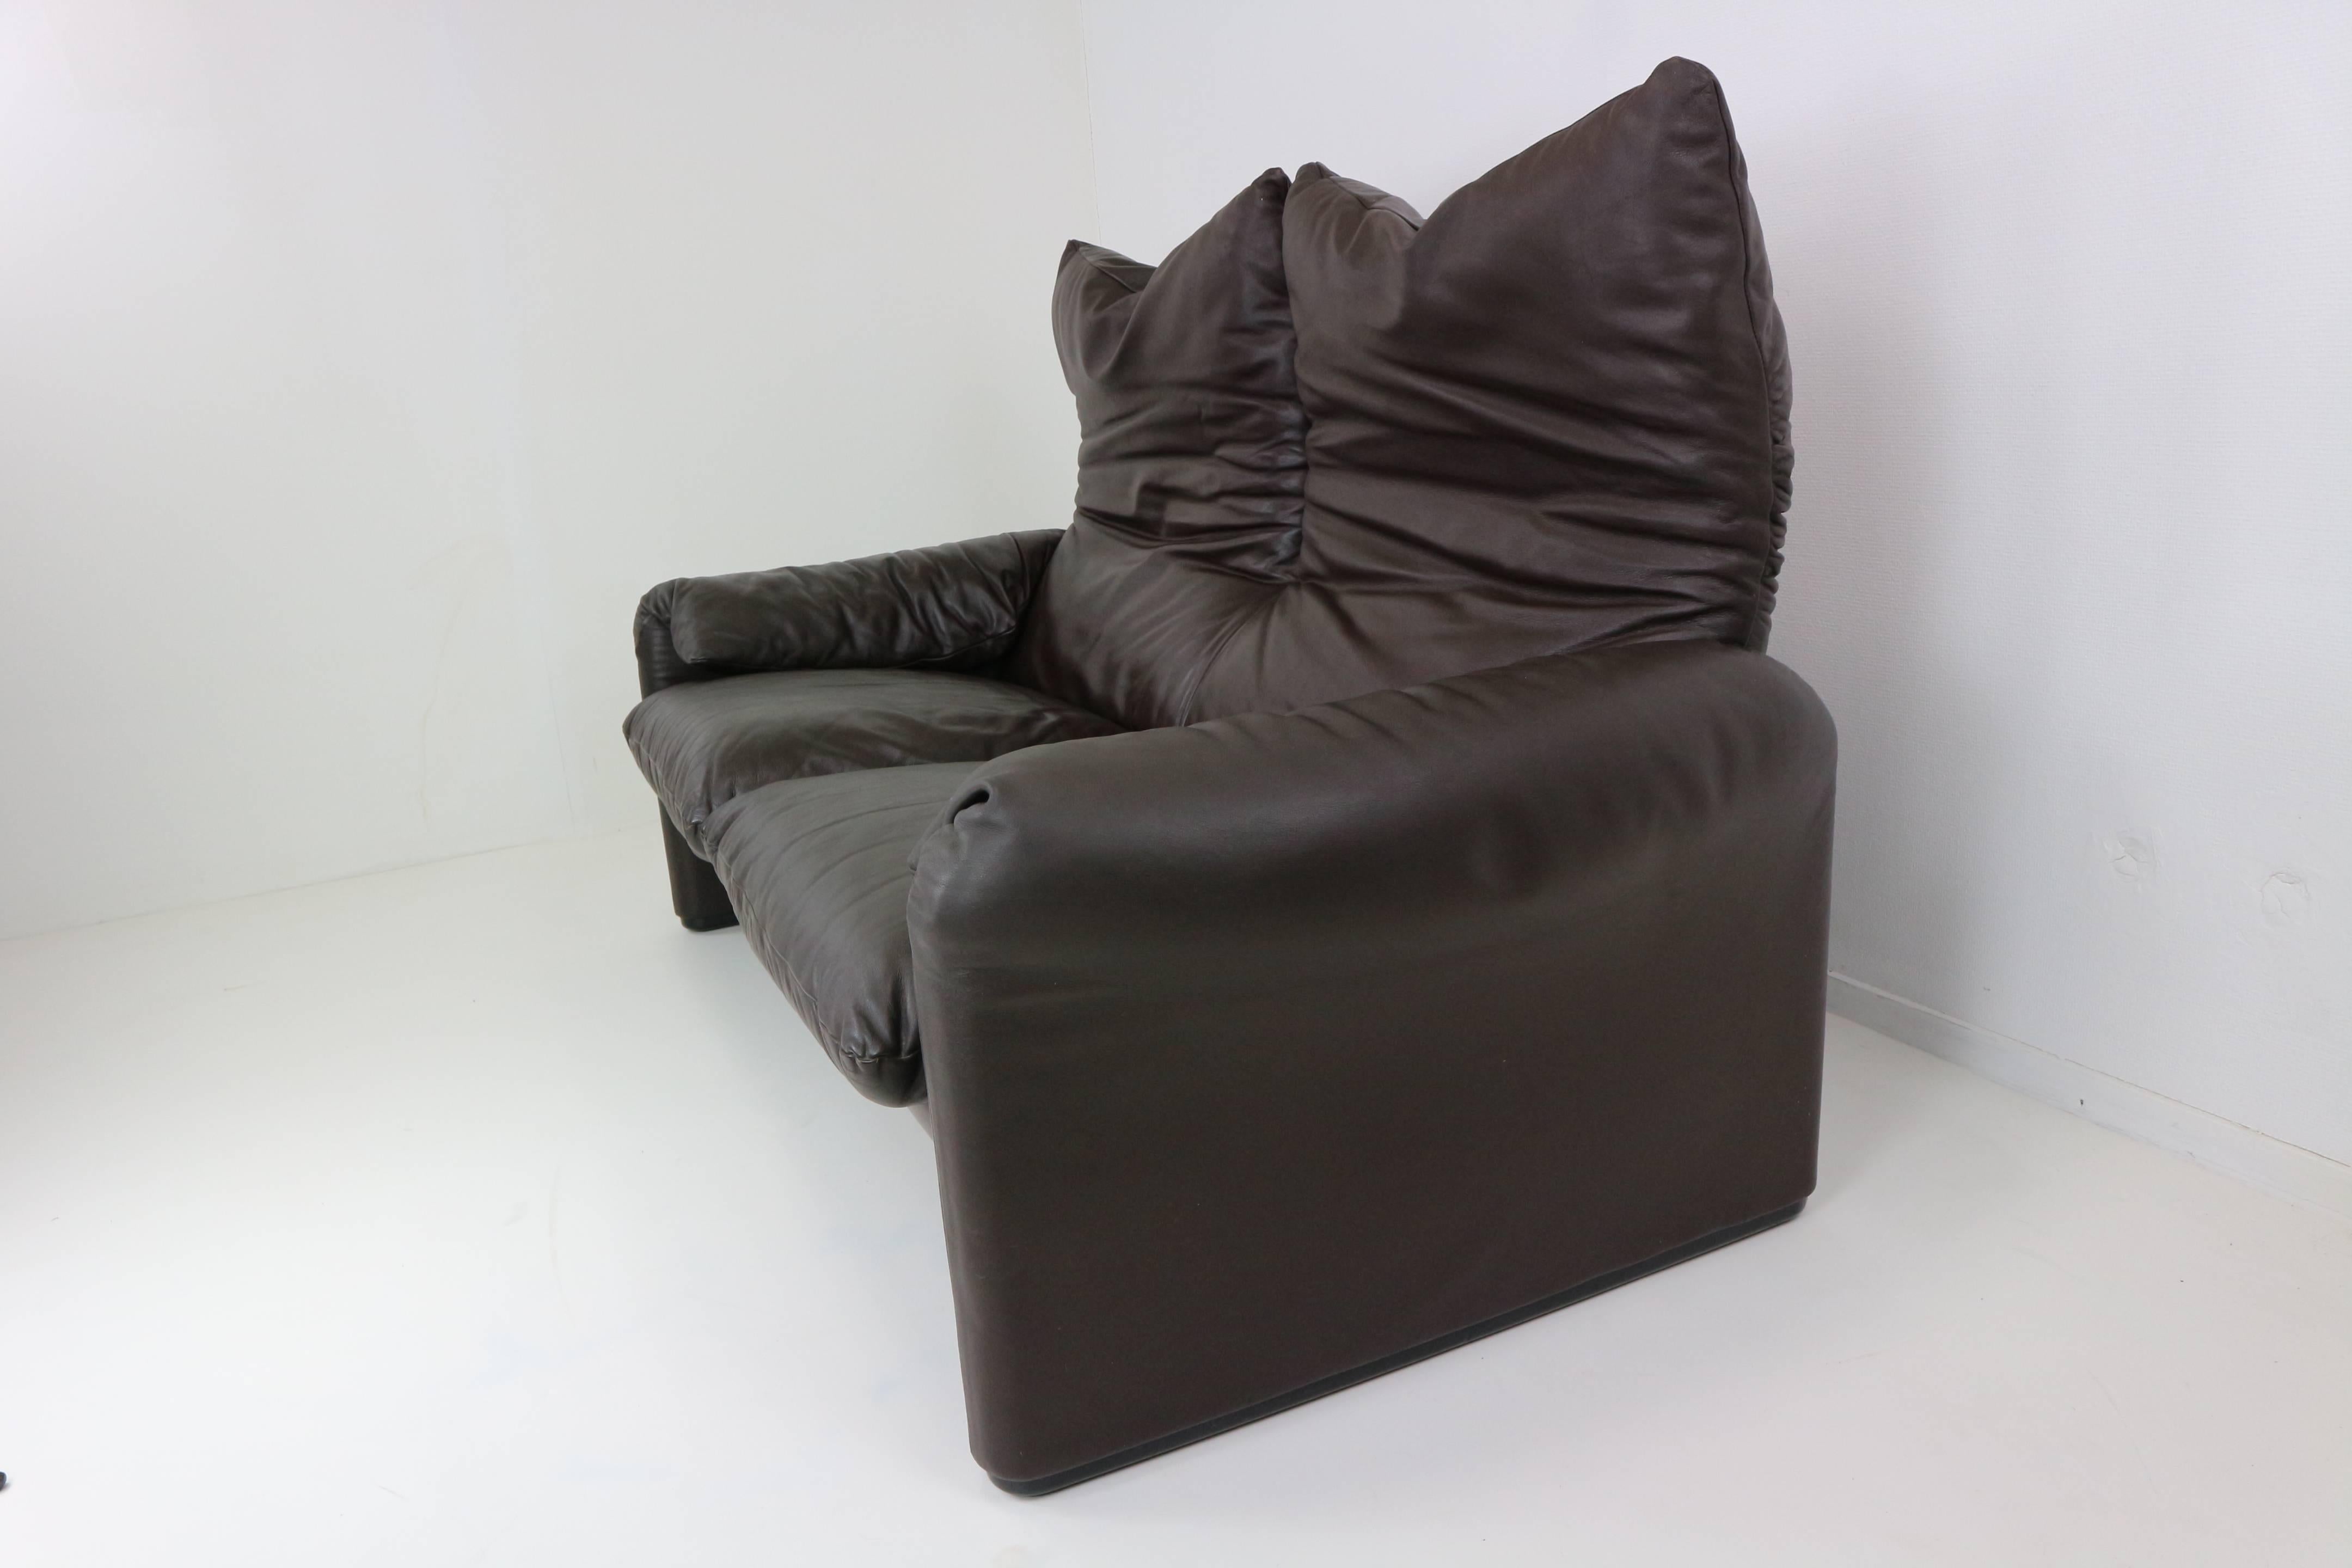 20th Century Leather Two-Seat Maralunga Design by Vico Magistretti for Cassina